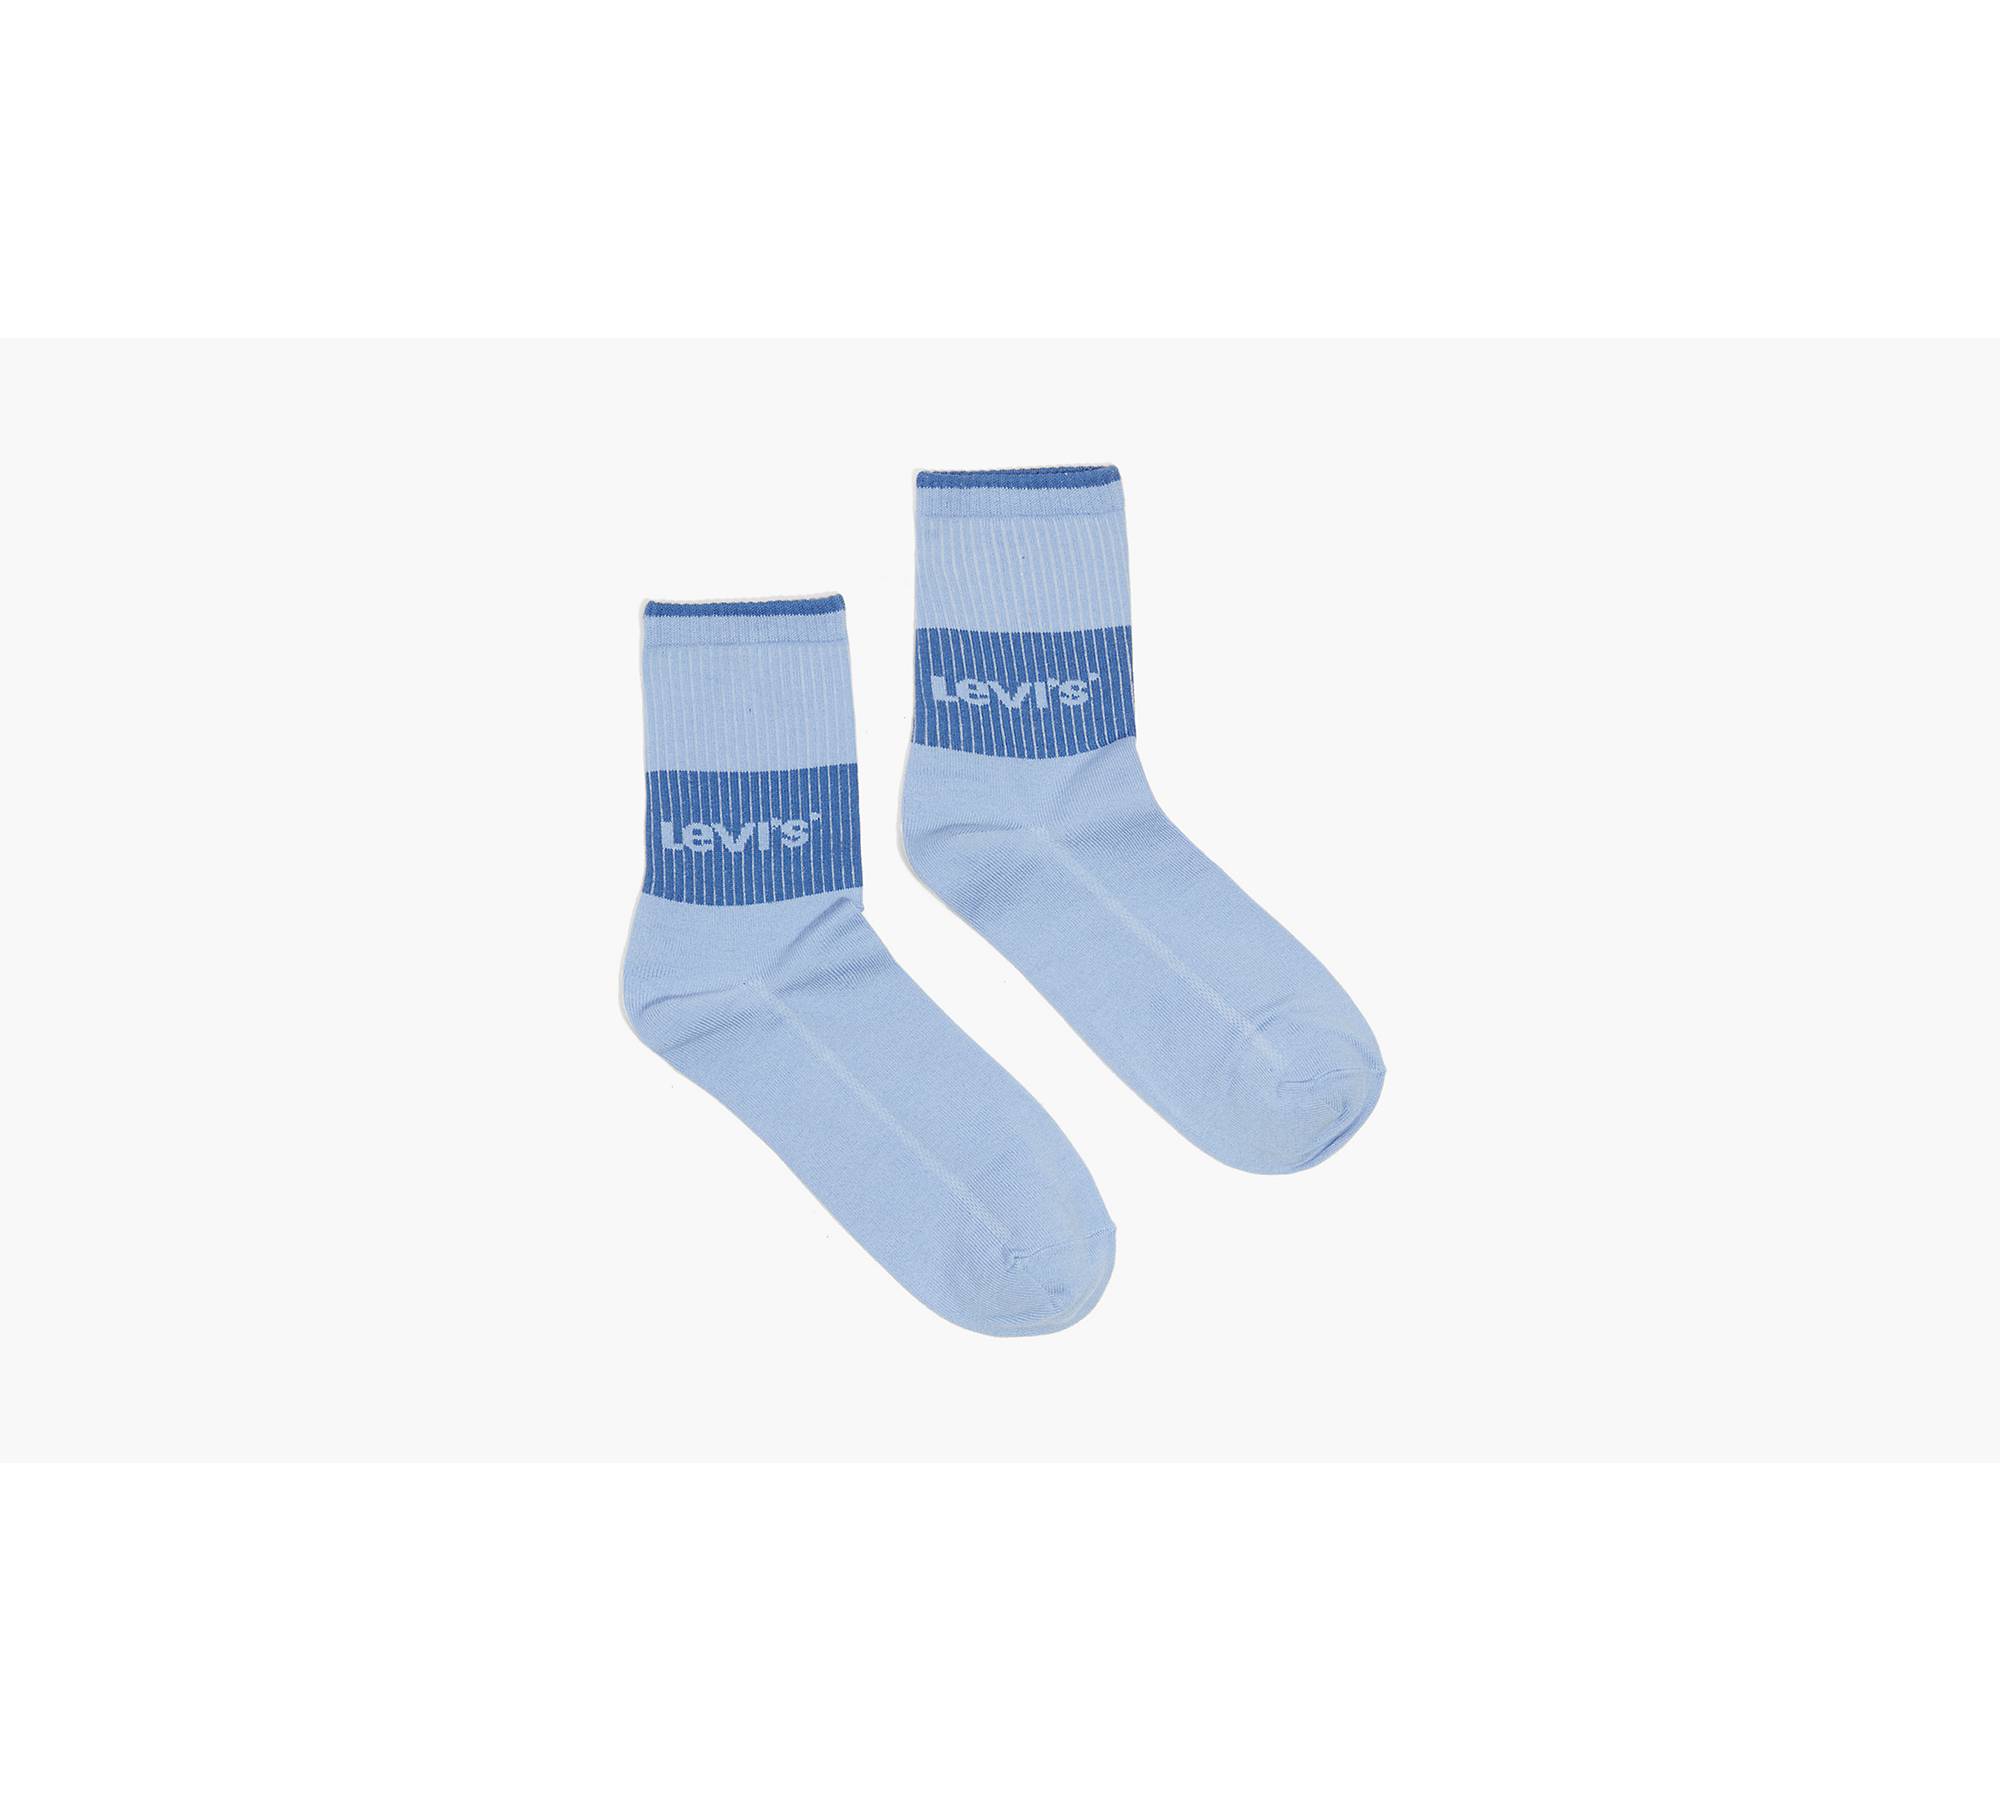 Short Cut Socks (2 Pack) - Multi-color | Levi's® US